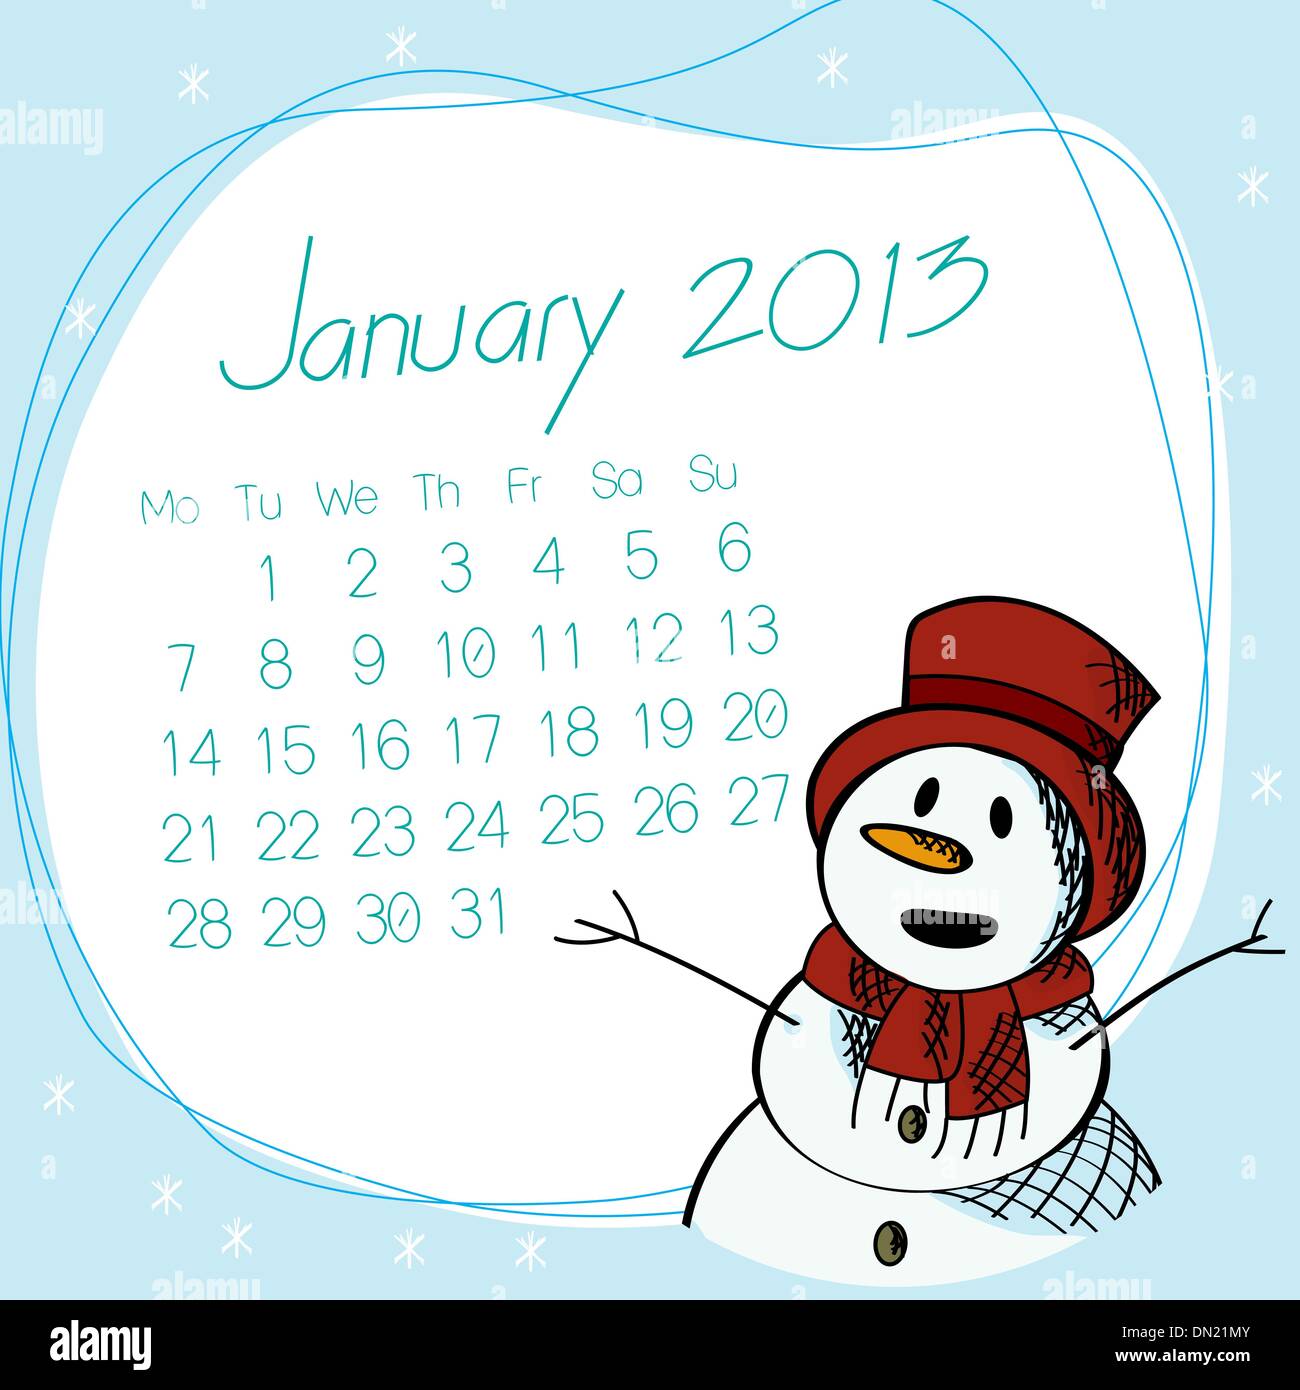 January 2013 snow man calendar Stock Vector